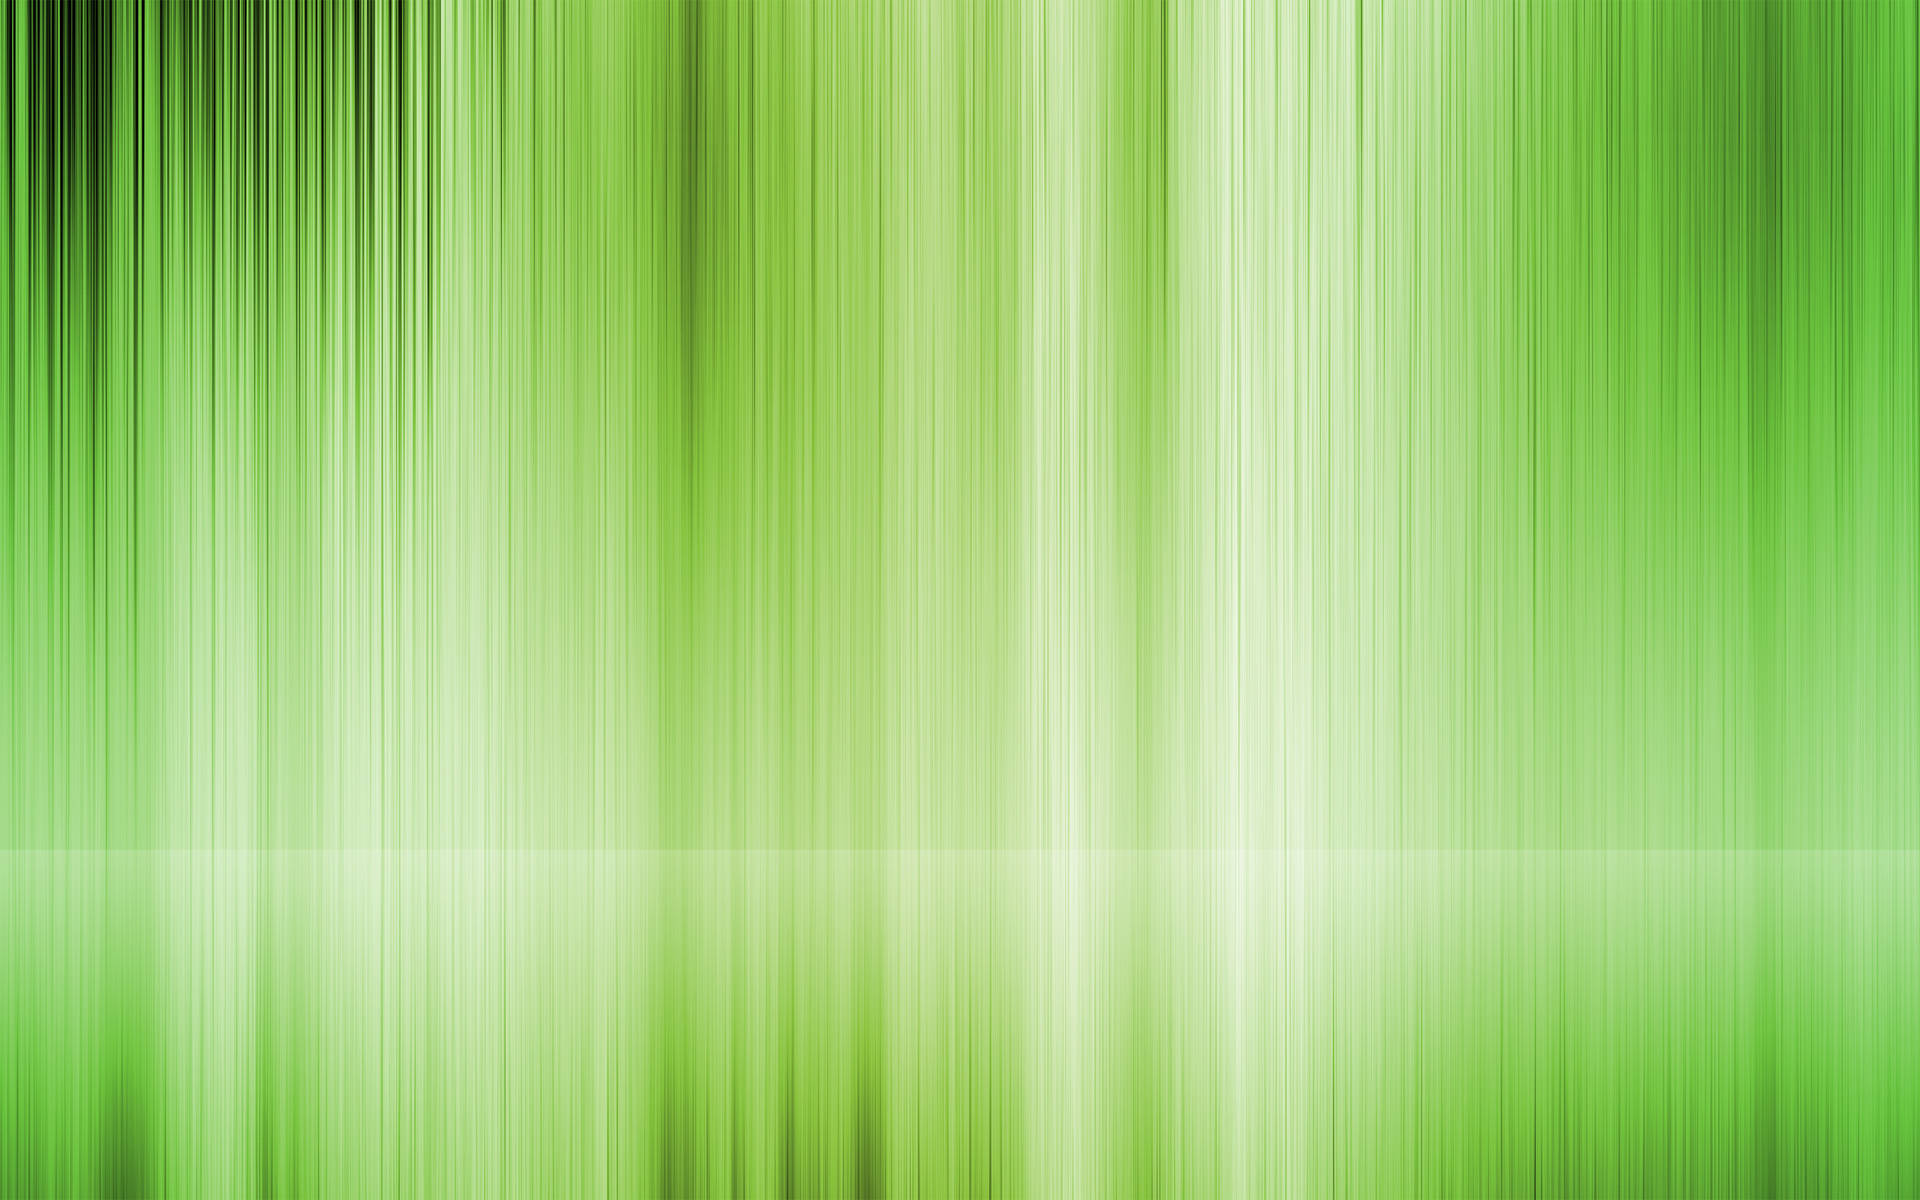 Caption: Striking Plain Green Flare Image